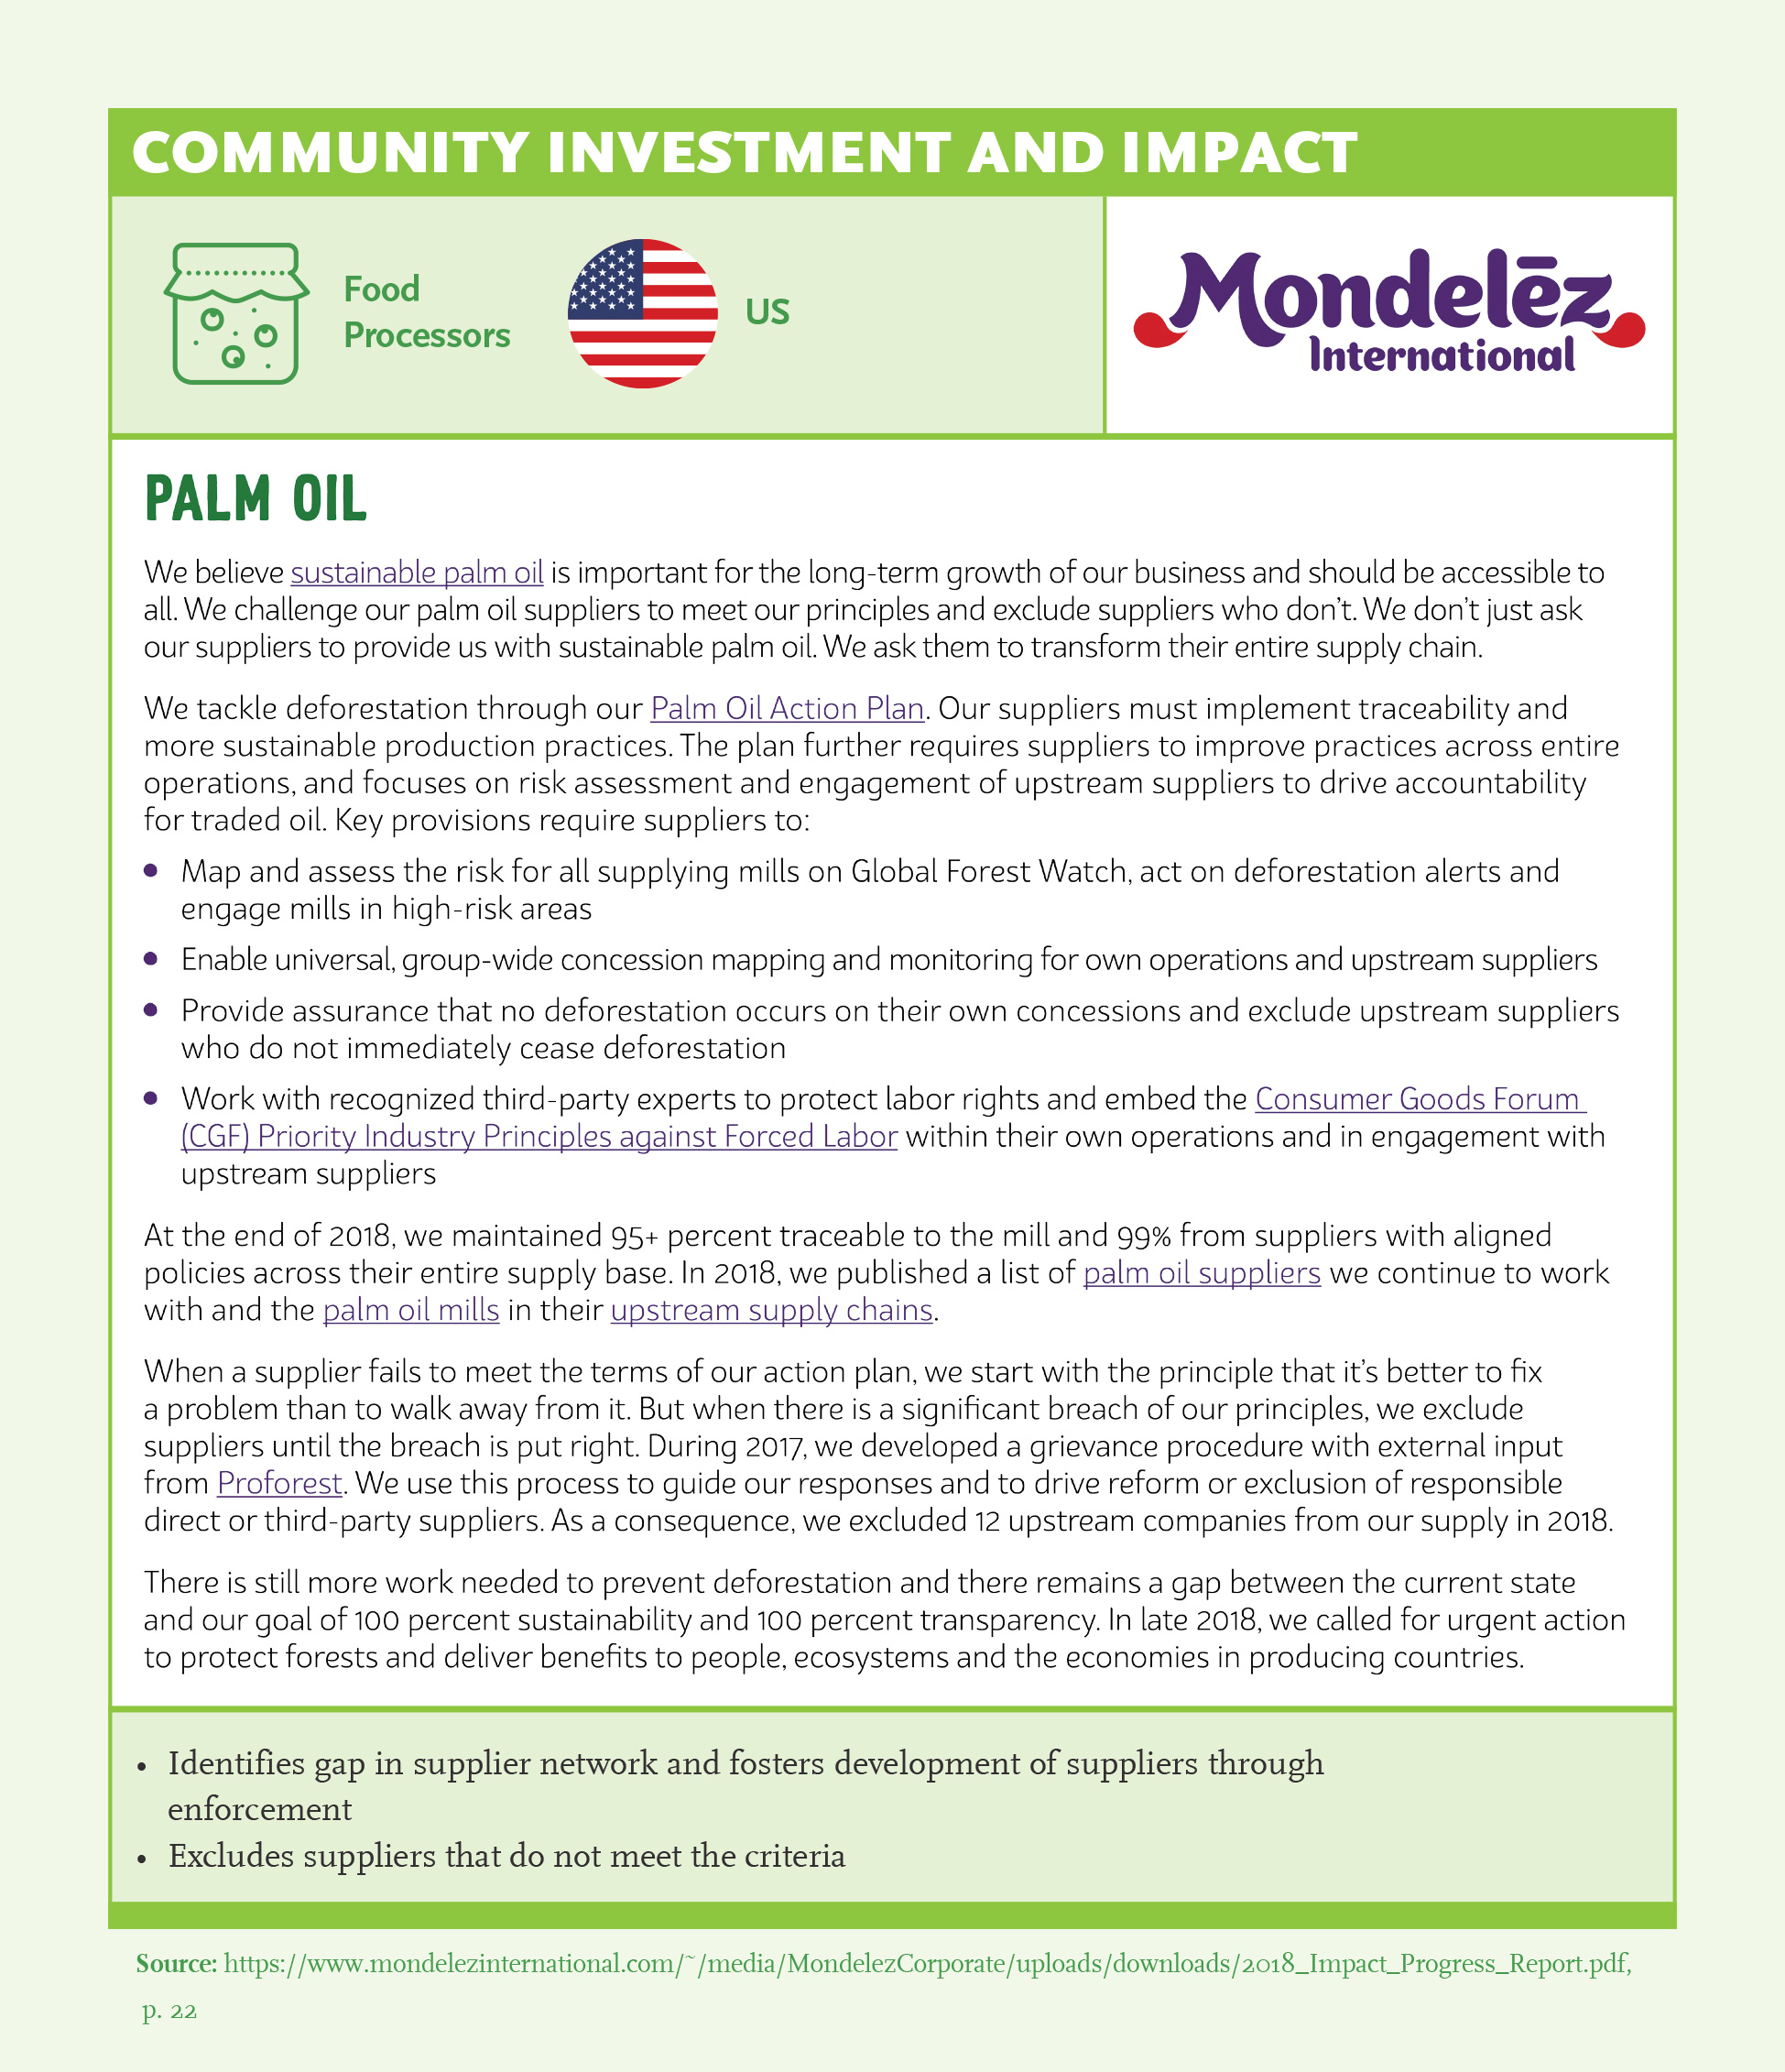 Community Investment and Impact: Mondelez